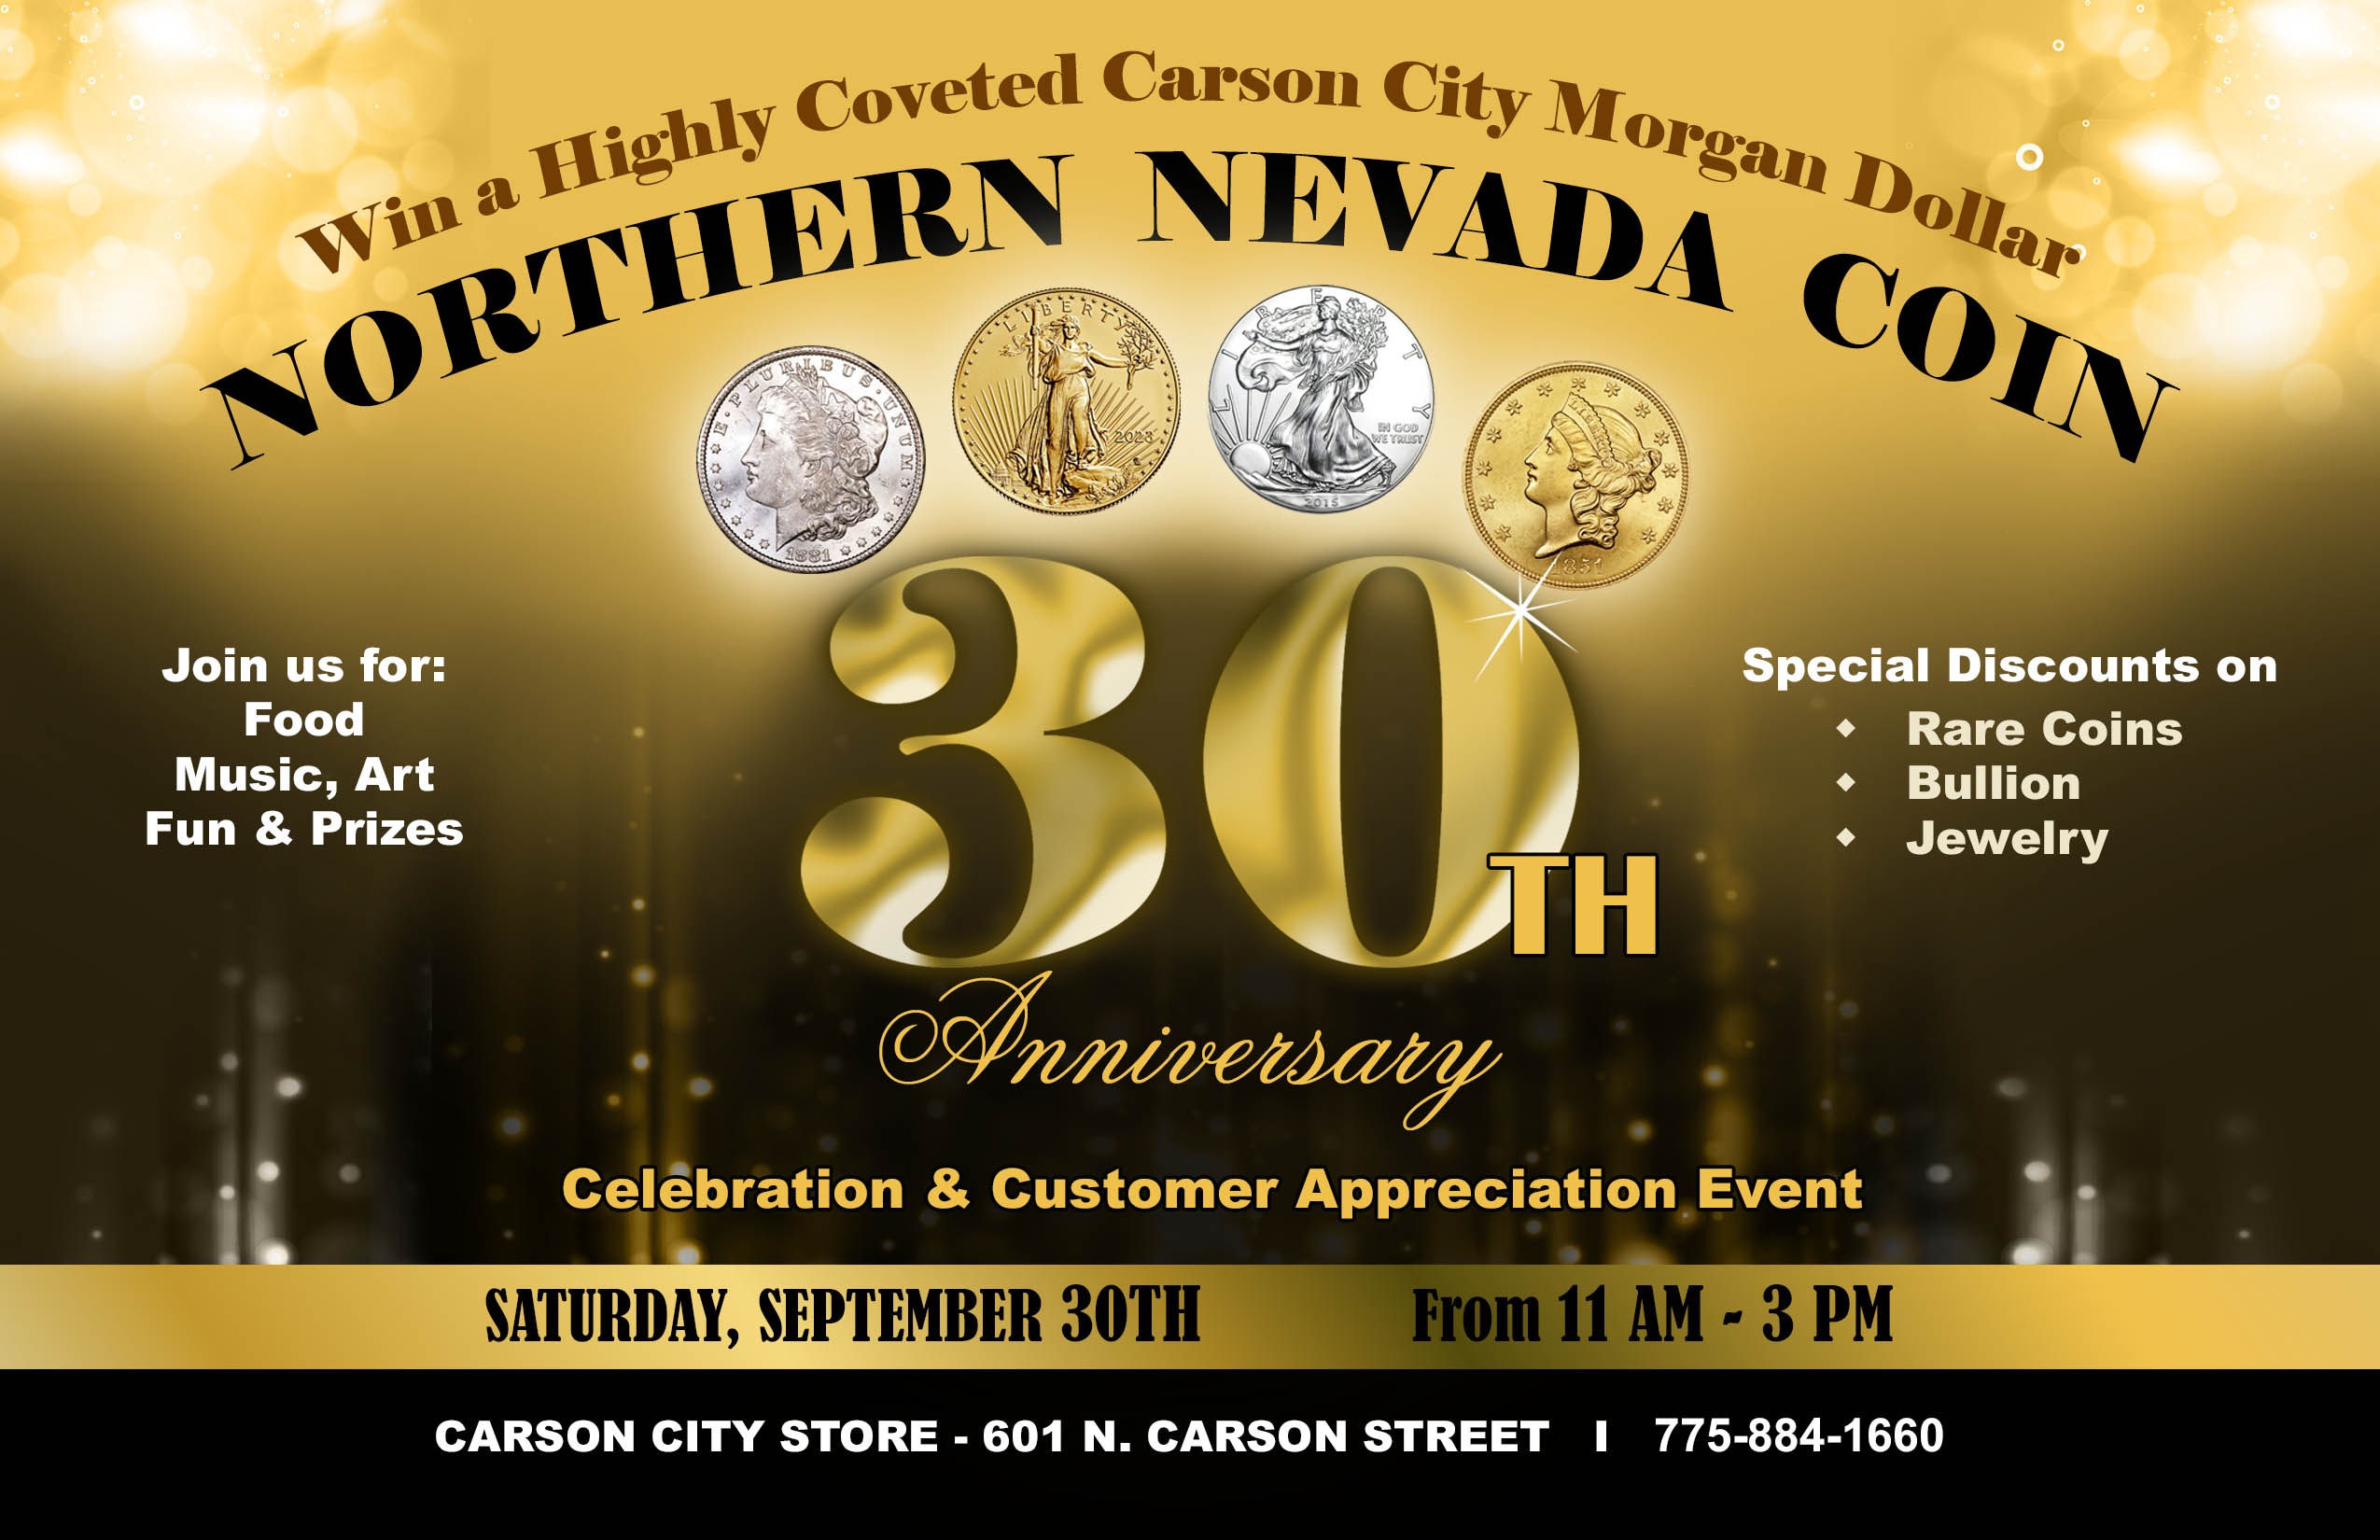 Nevada coin dealers - bitcoinhelp.fun - Nevada coin dealer directory